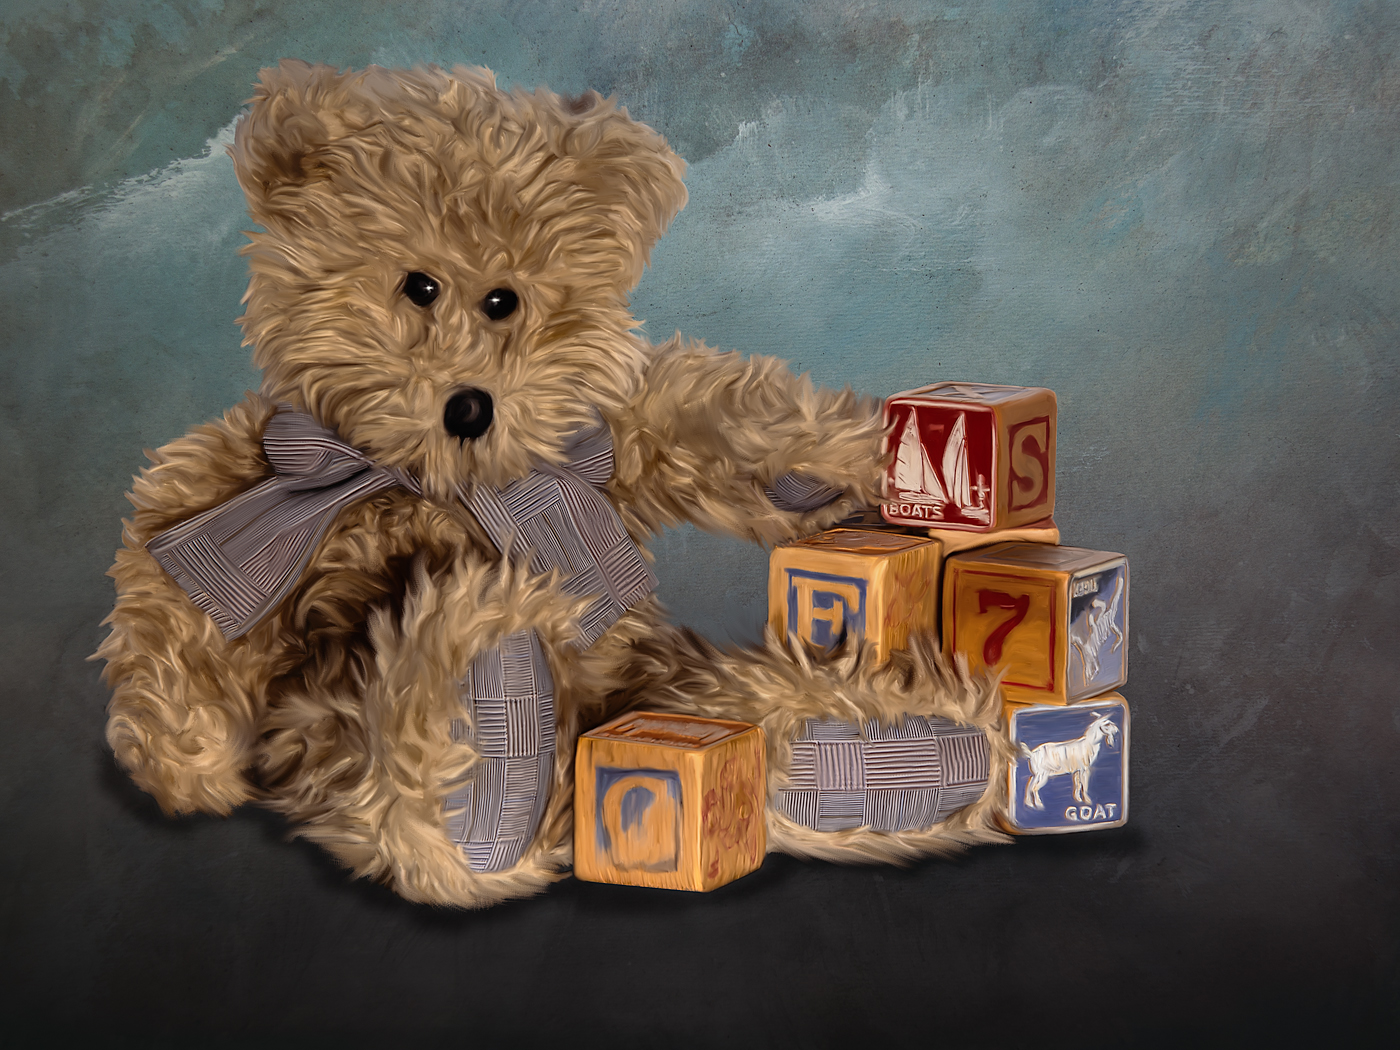 Eric’s Teddy Bear by Cindy Gosselin